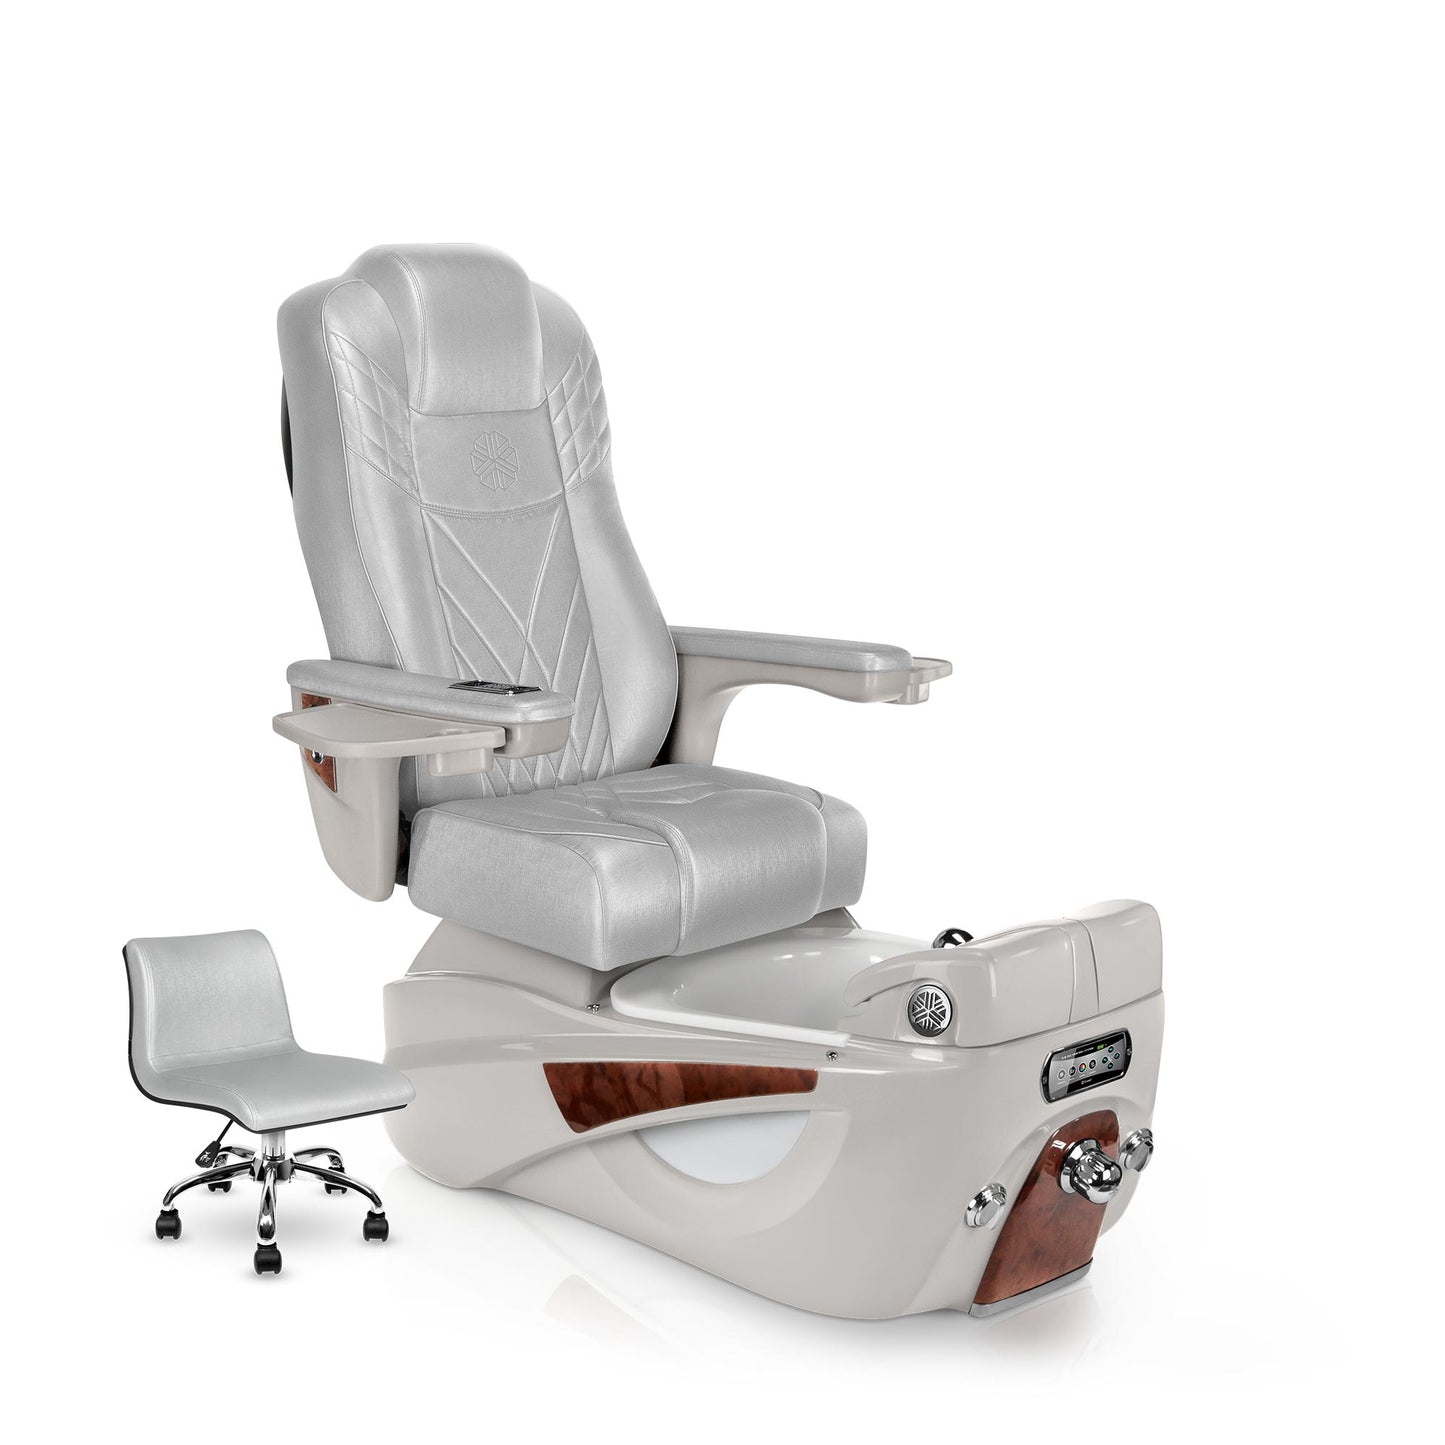 Lexor LUMINOUS pedicure chair with platinum cushion and sandstone spa base